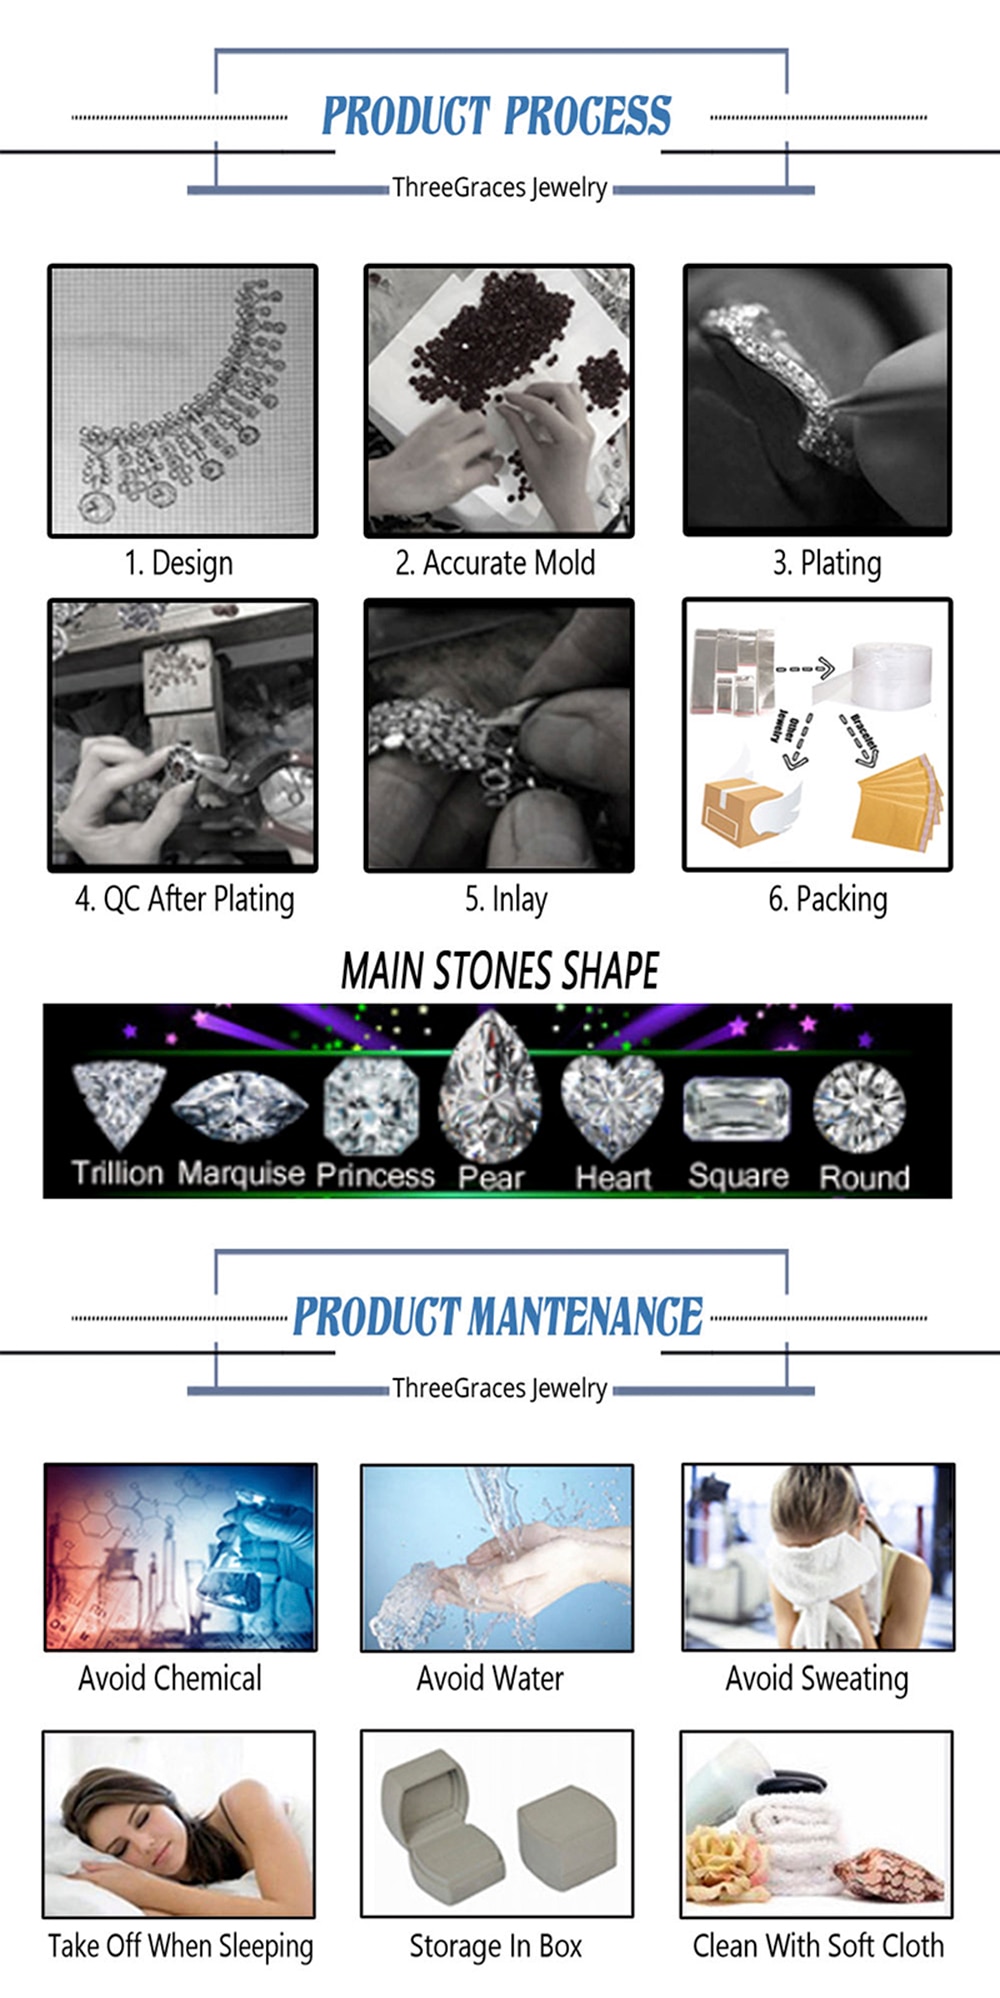 ThreeGraces-4pcs-Brilliant-Cubic-Zirconia-Stone-Luxury-African-Dubai-Bridal-Jewelry-Set-for-Women-Pa-1005005075523156-14